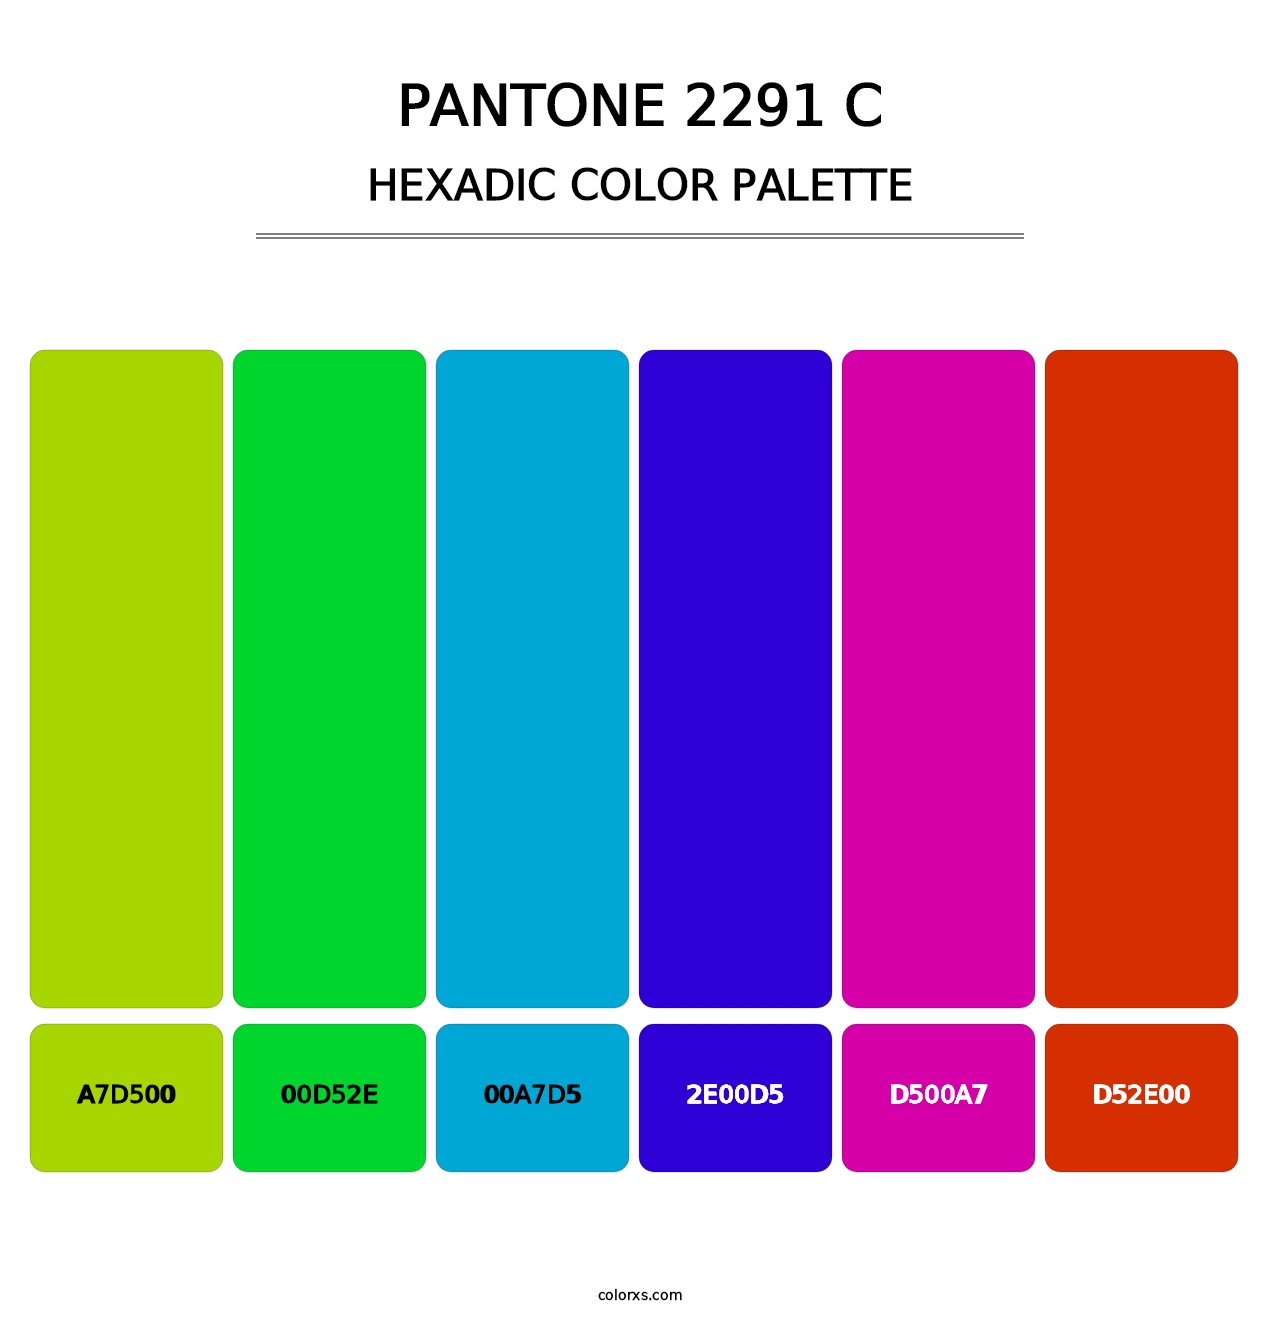 PANTONE 2291 C - Hexadic Color Palette